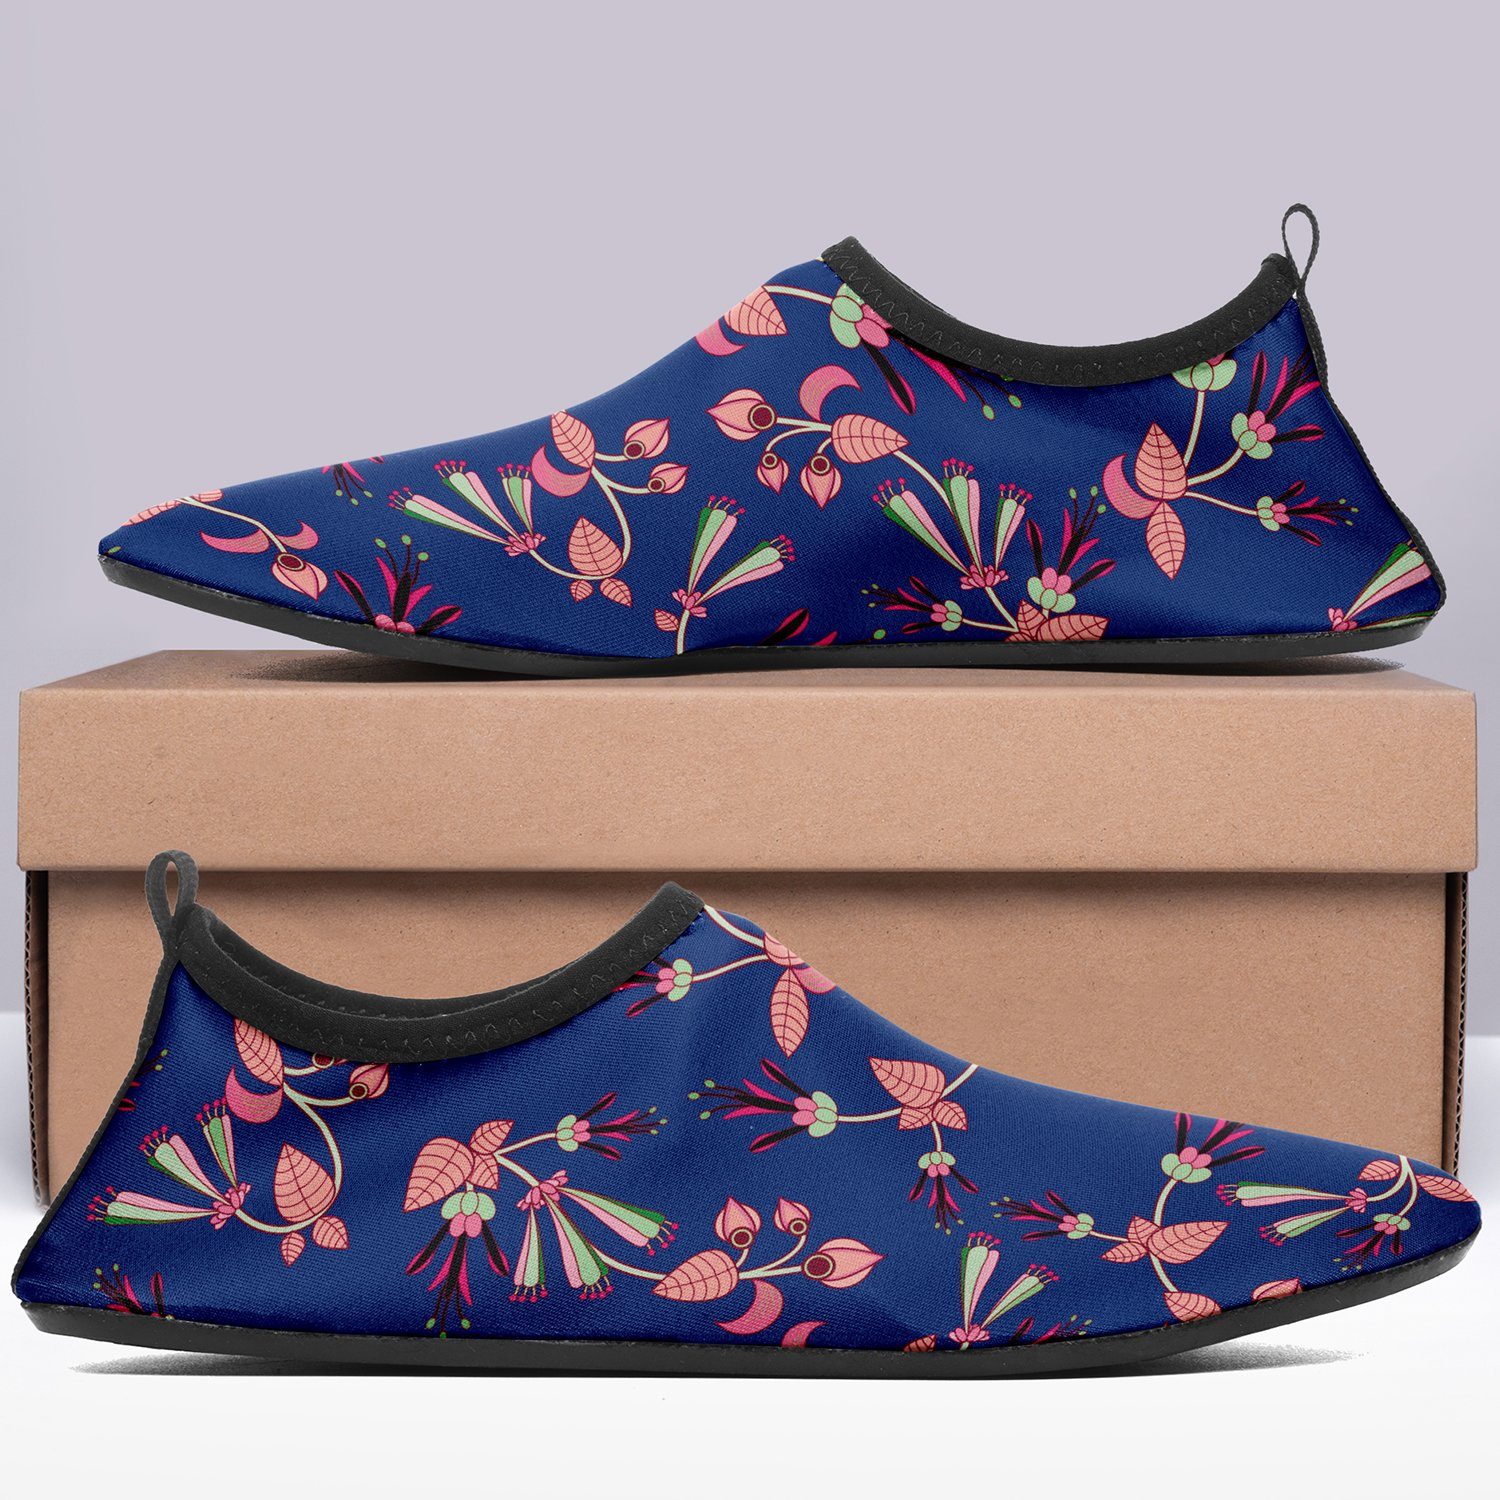 Swift Floral Peach Blue Sockamoccs Slip On Shoes Herman 